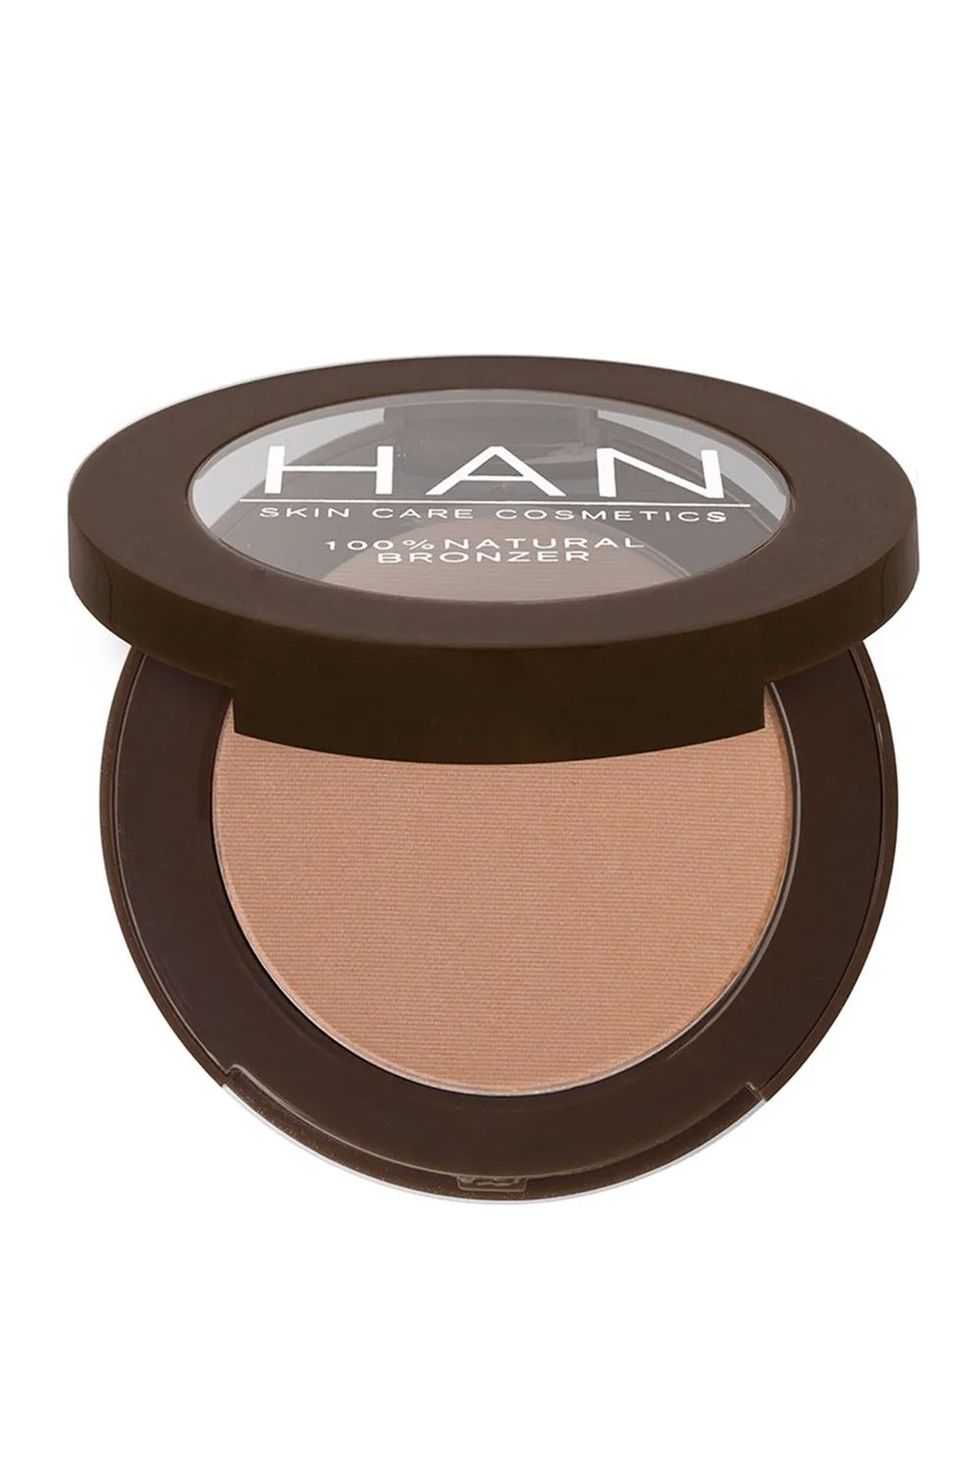 Han Skin Care Cosmetics 100% Natural Bronzer